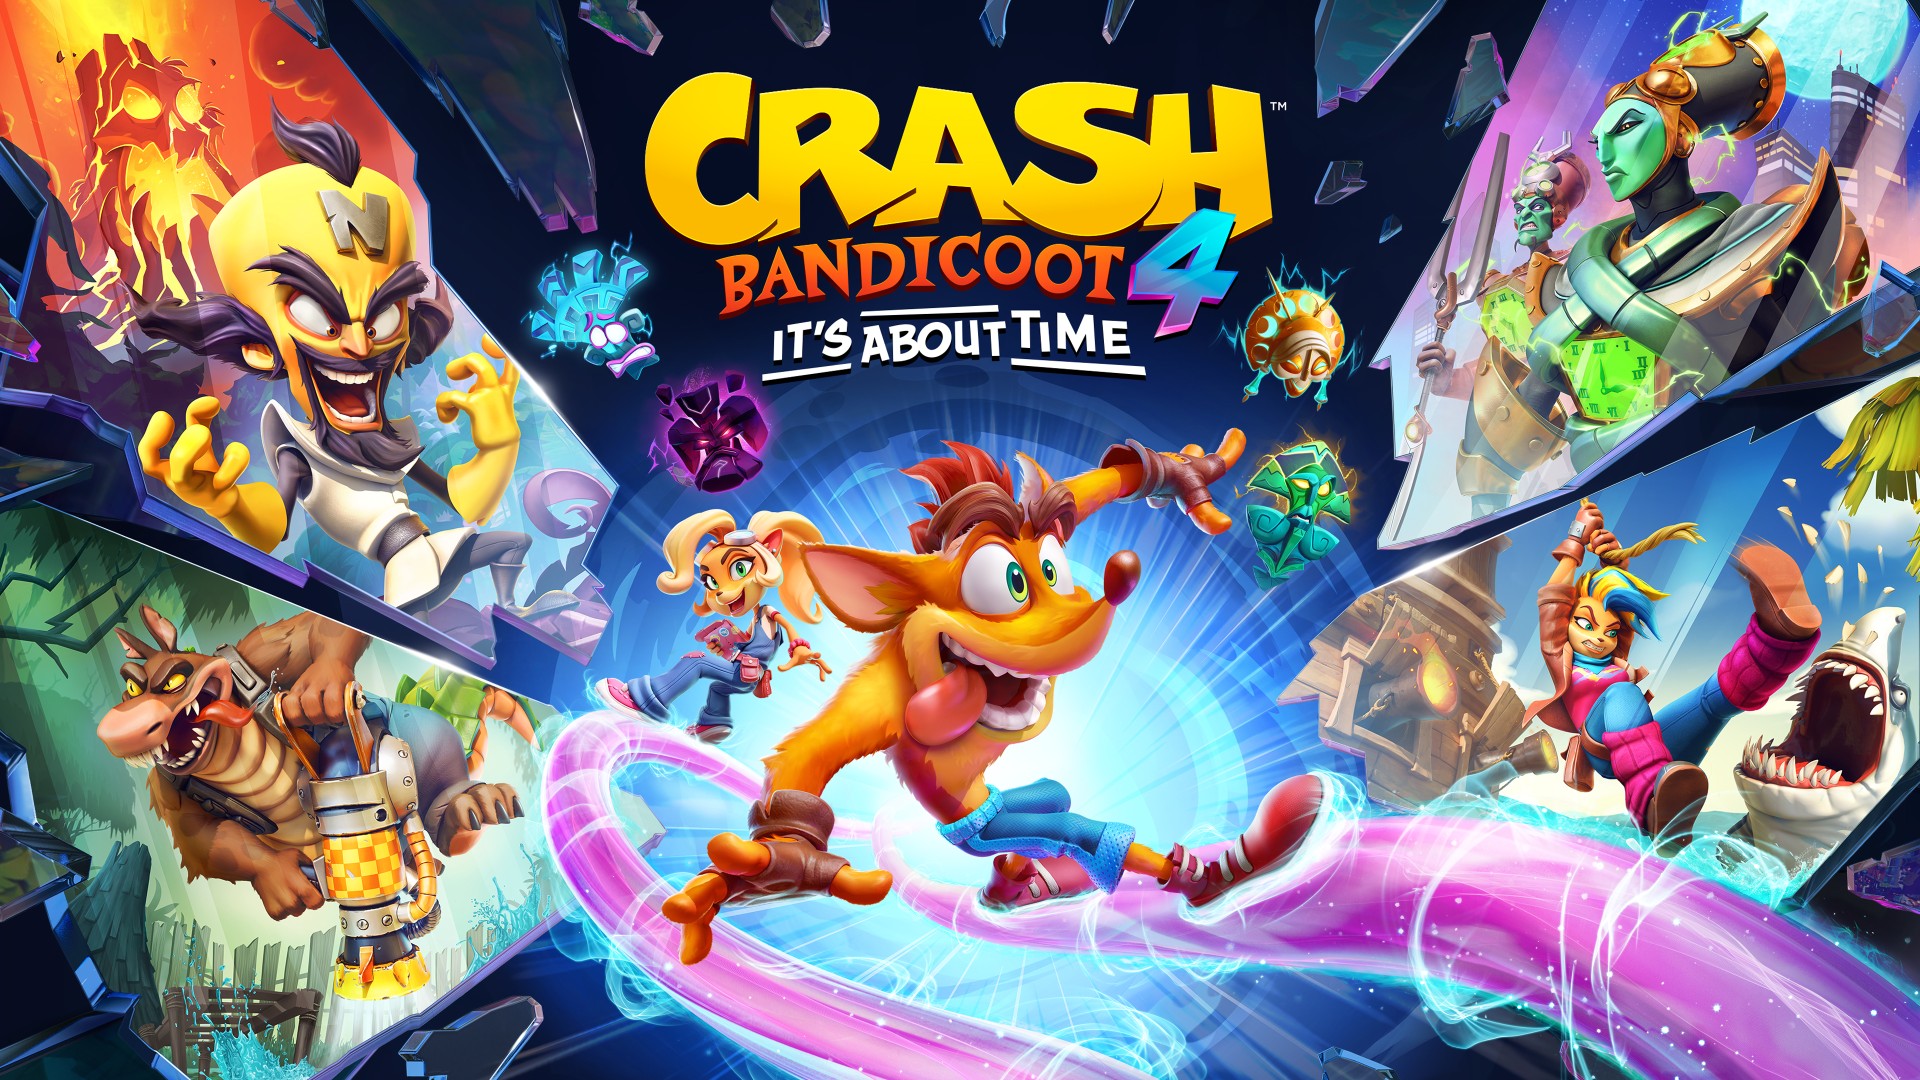 XboxOne Crash Bandicoot 4: Its About Time